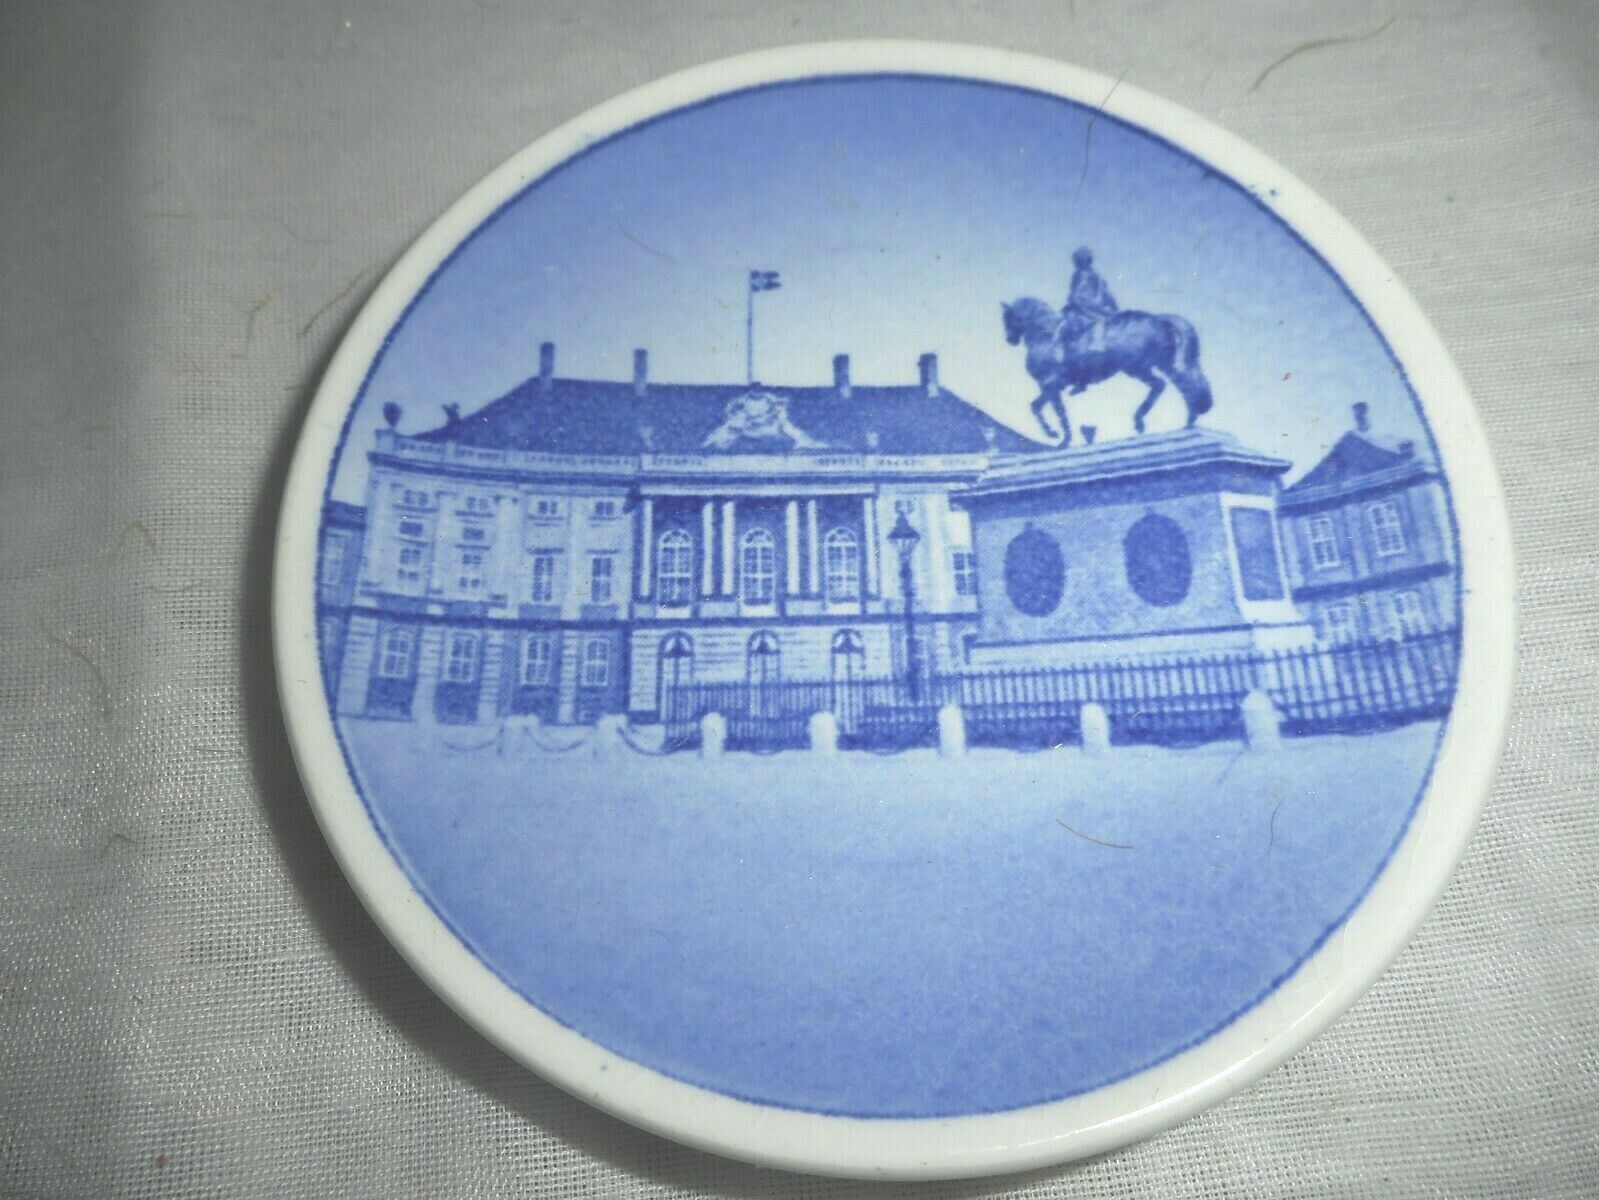 Primary image for Royal Copenhagen Denmark Amalienborg Slot Mini Souvenir Dish Plate 13-2010